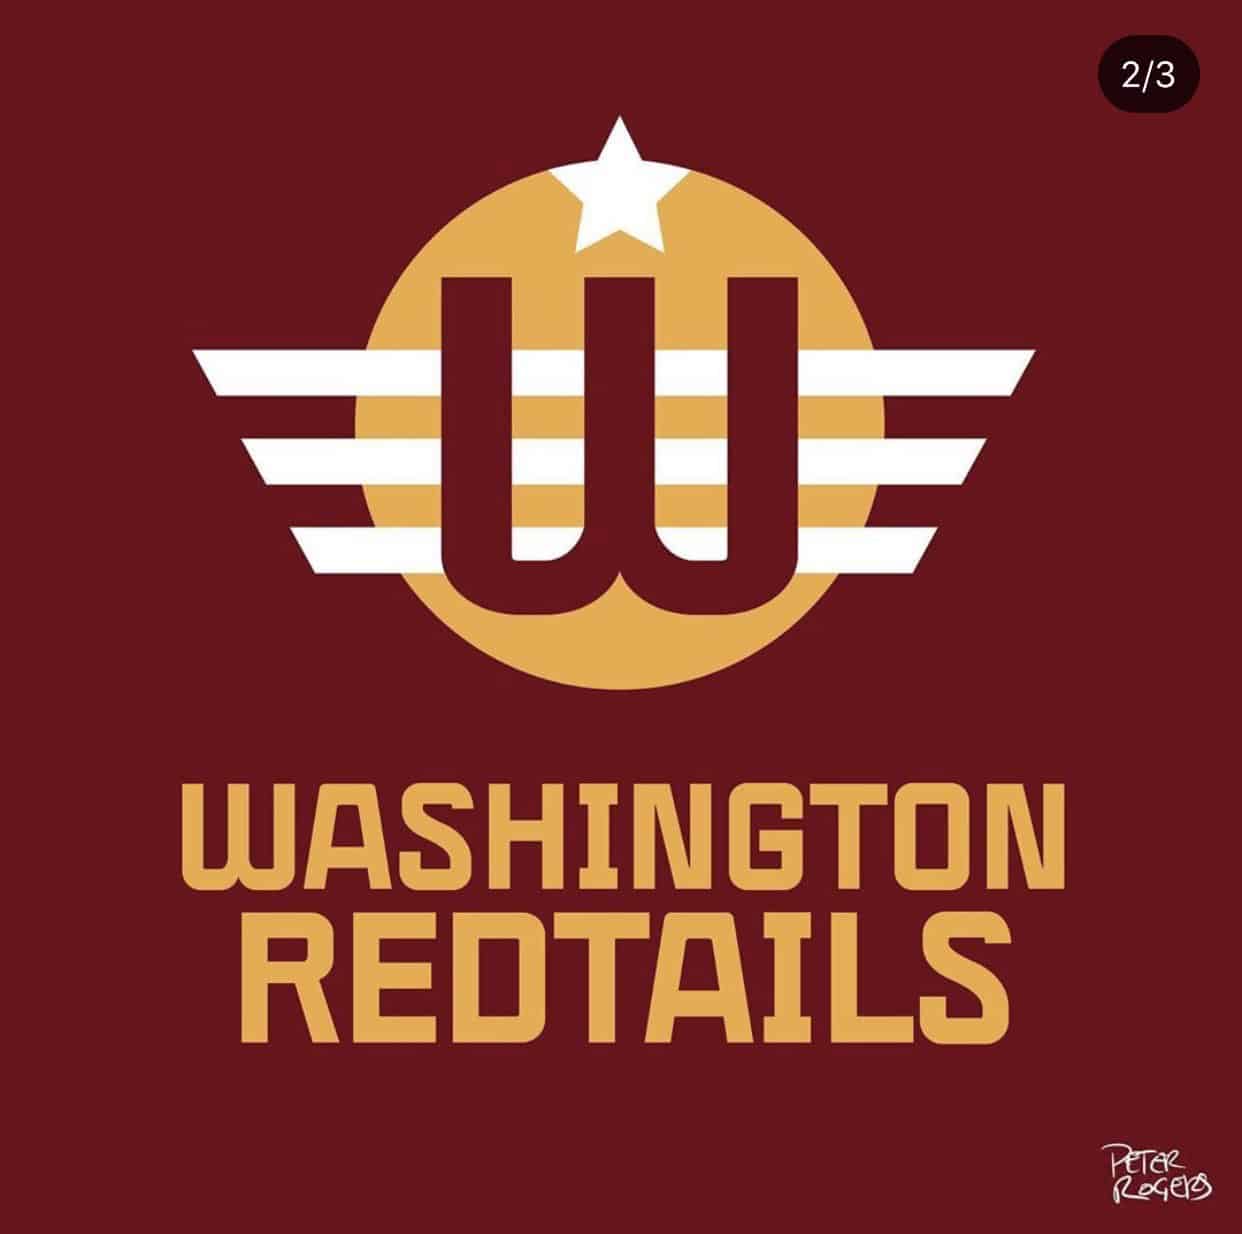 Washington Redskins, Washington Redtails